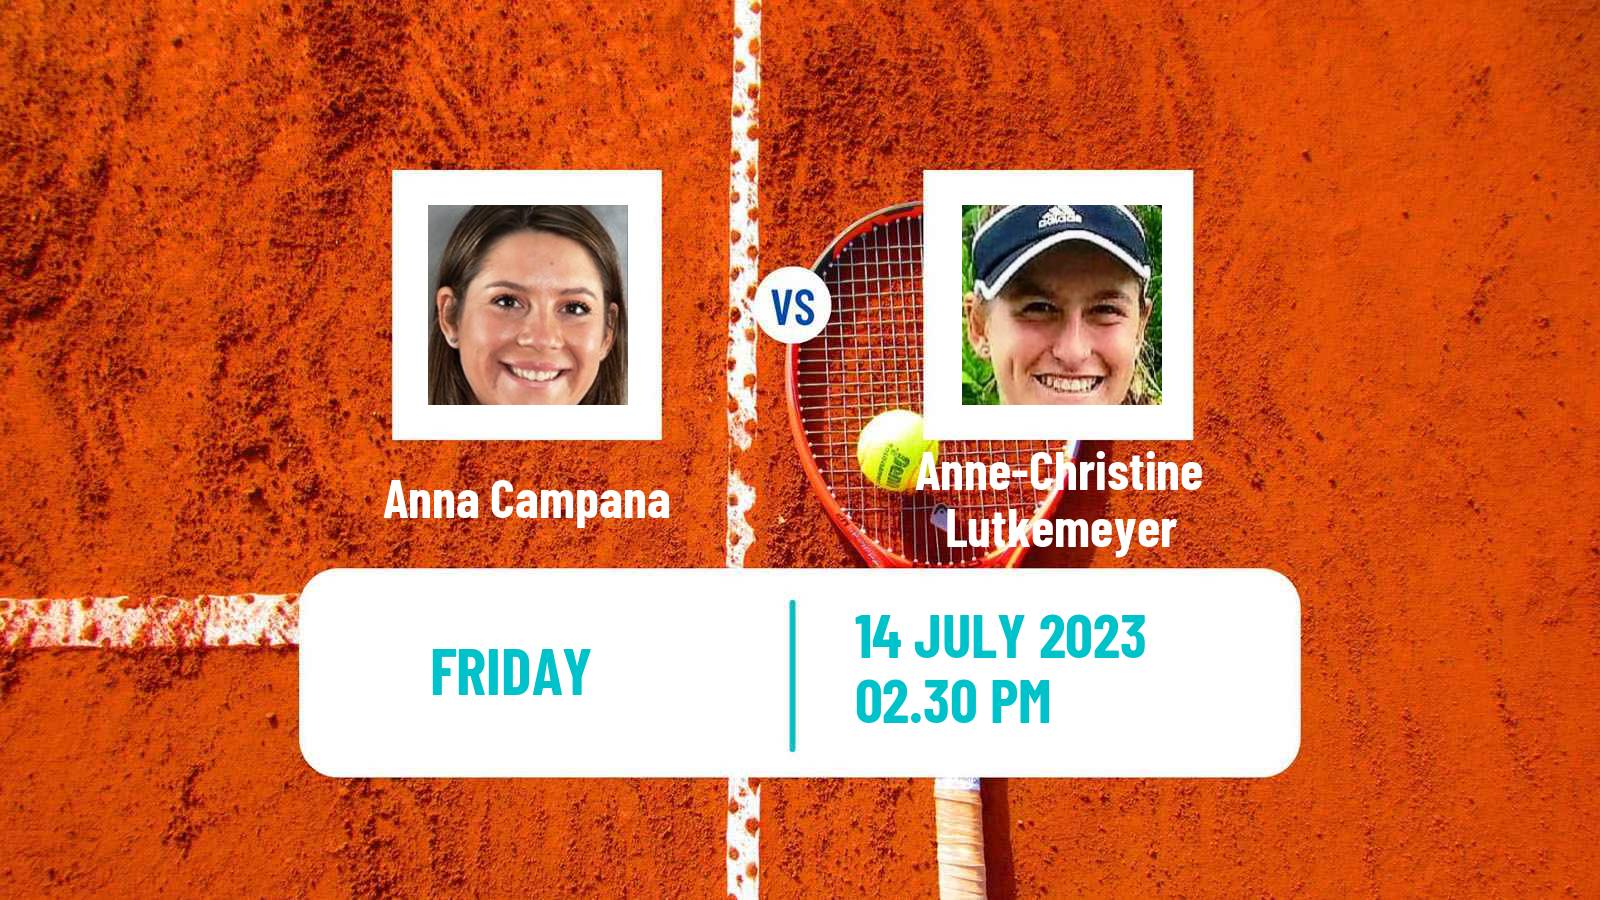 Tennis ITF W15 Lakewood Ca 2 Women Anna Campana - Anne-Christine Lutkemeyer